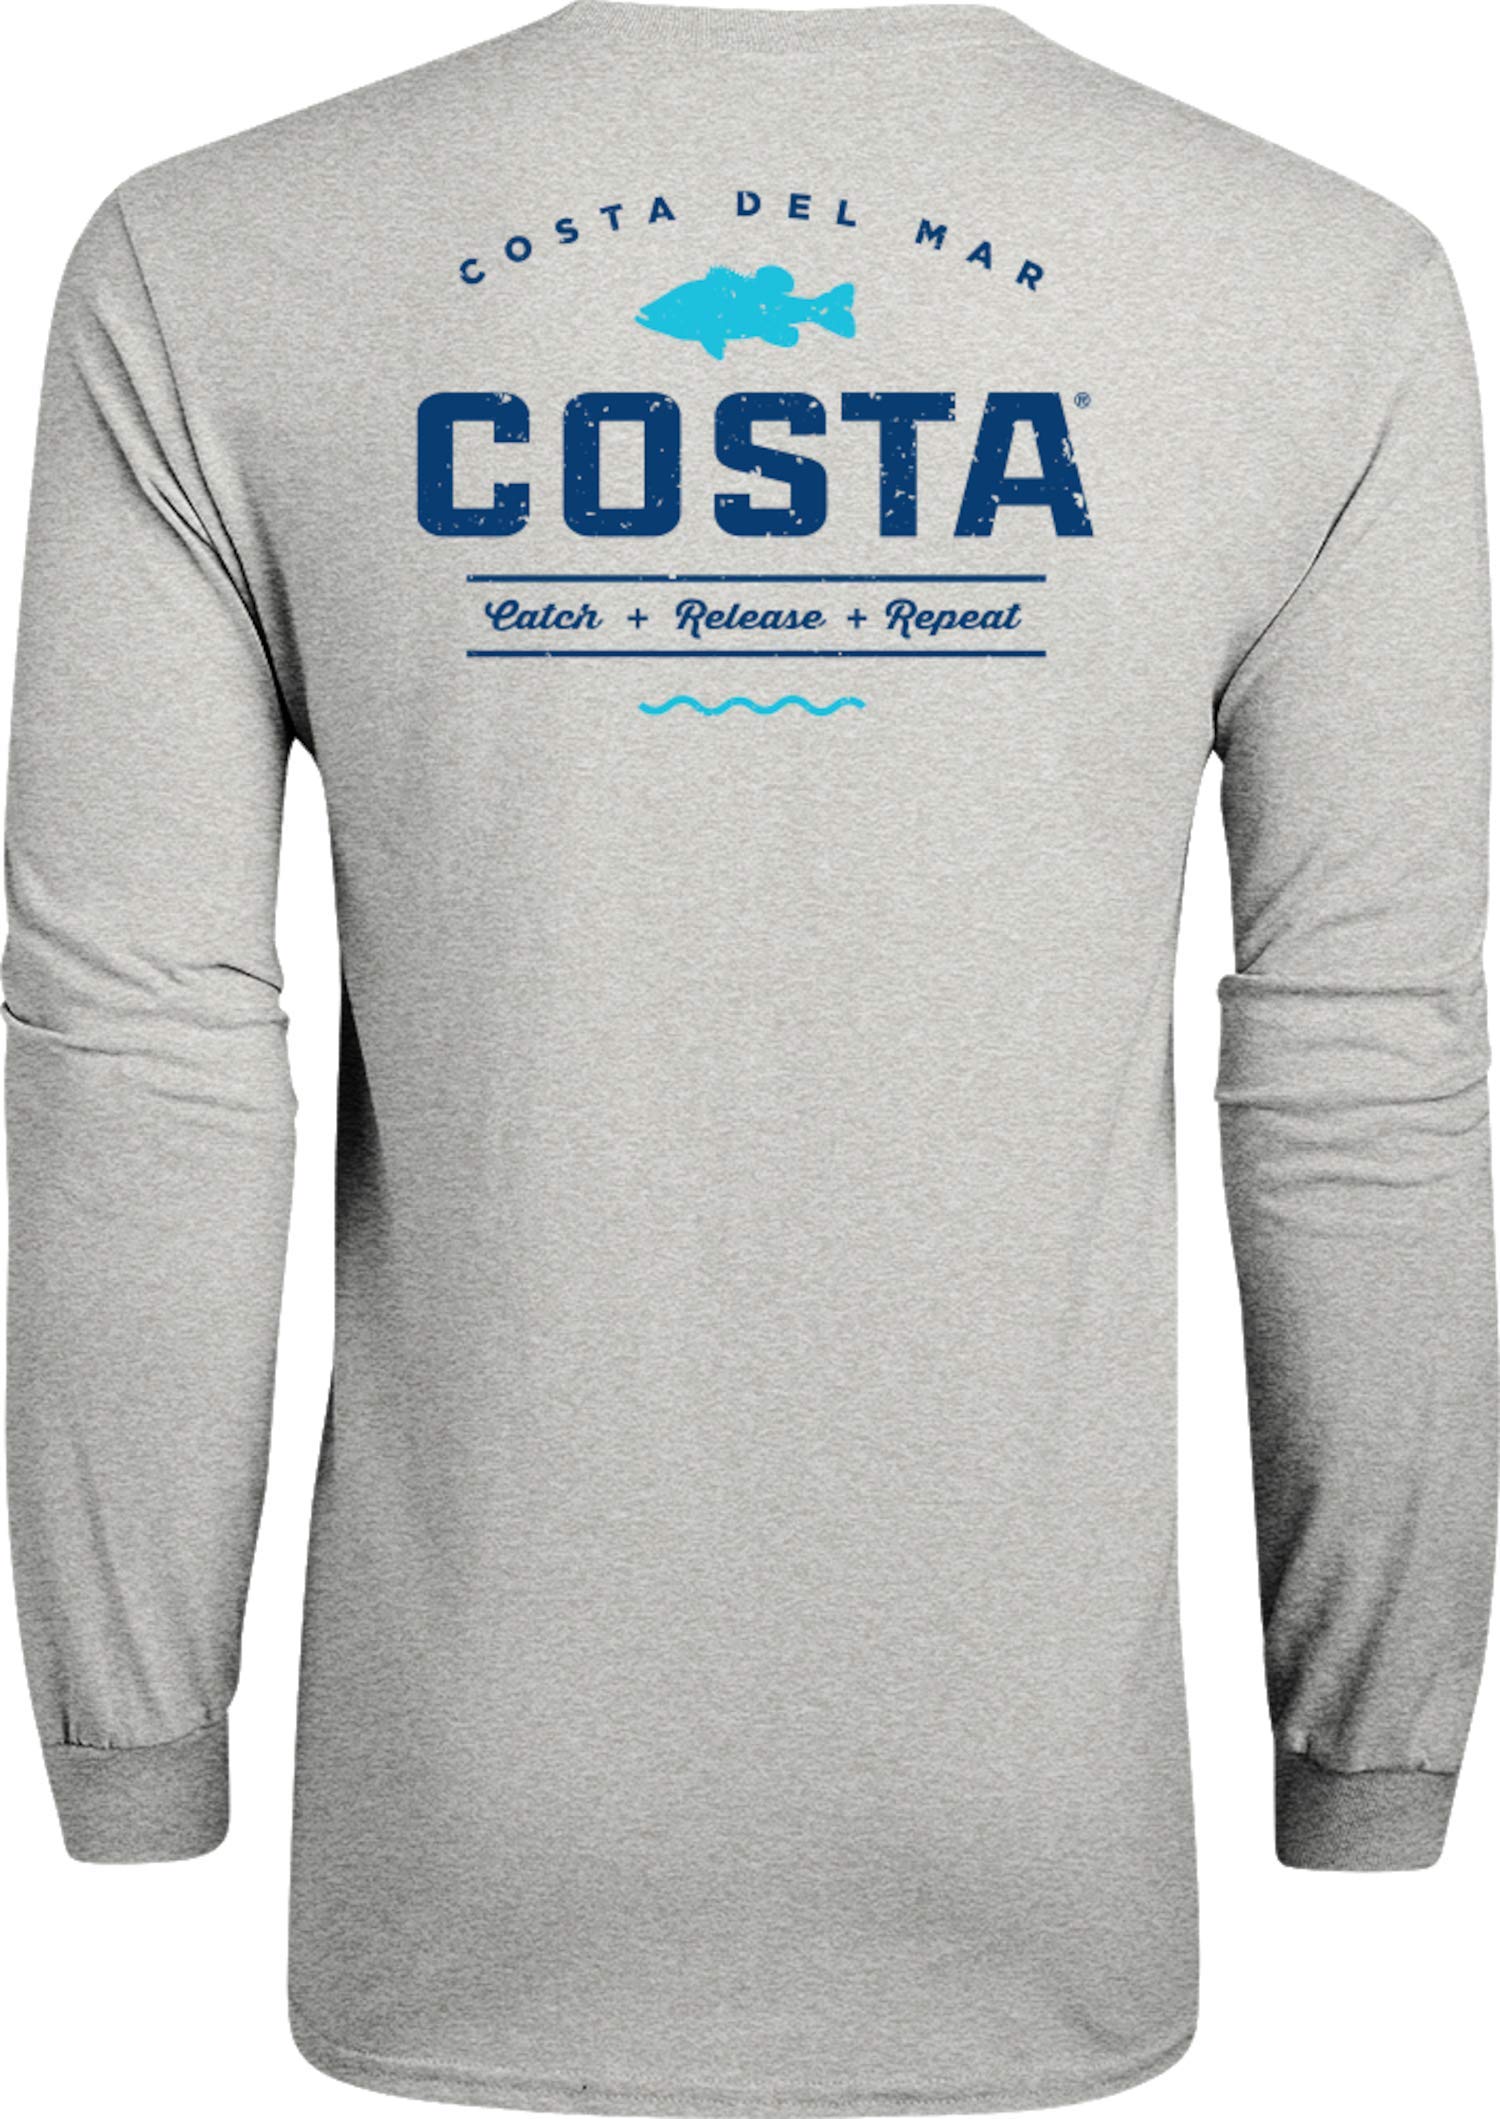 Costa Del Mar Topwater Long Sleeve Shirt, Gray Heather, Small